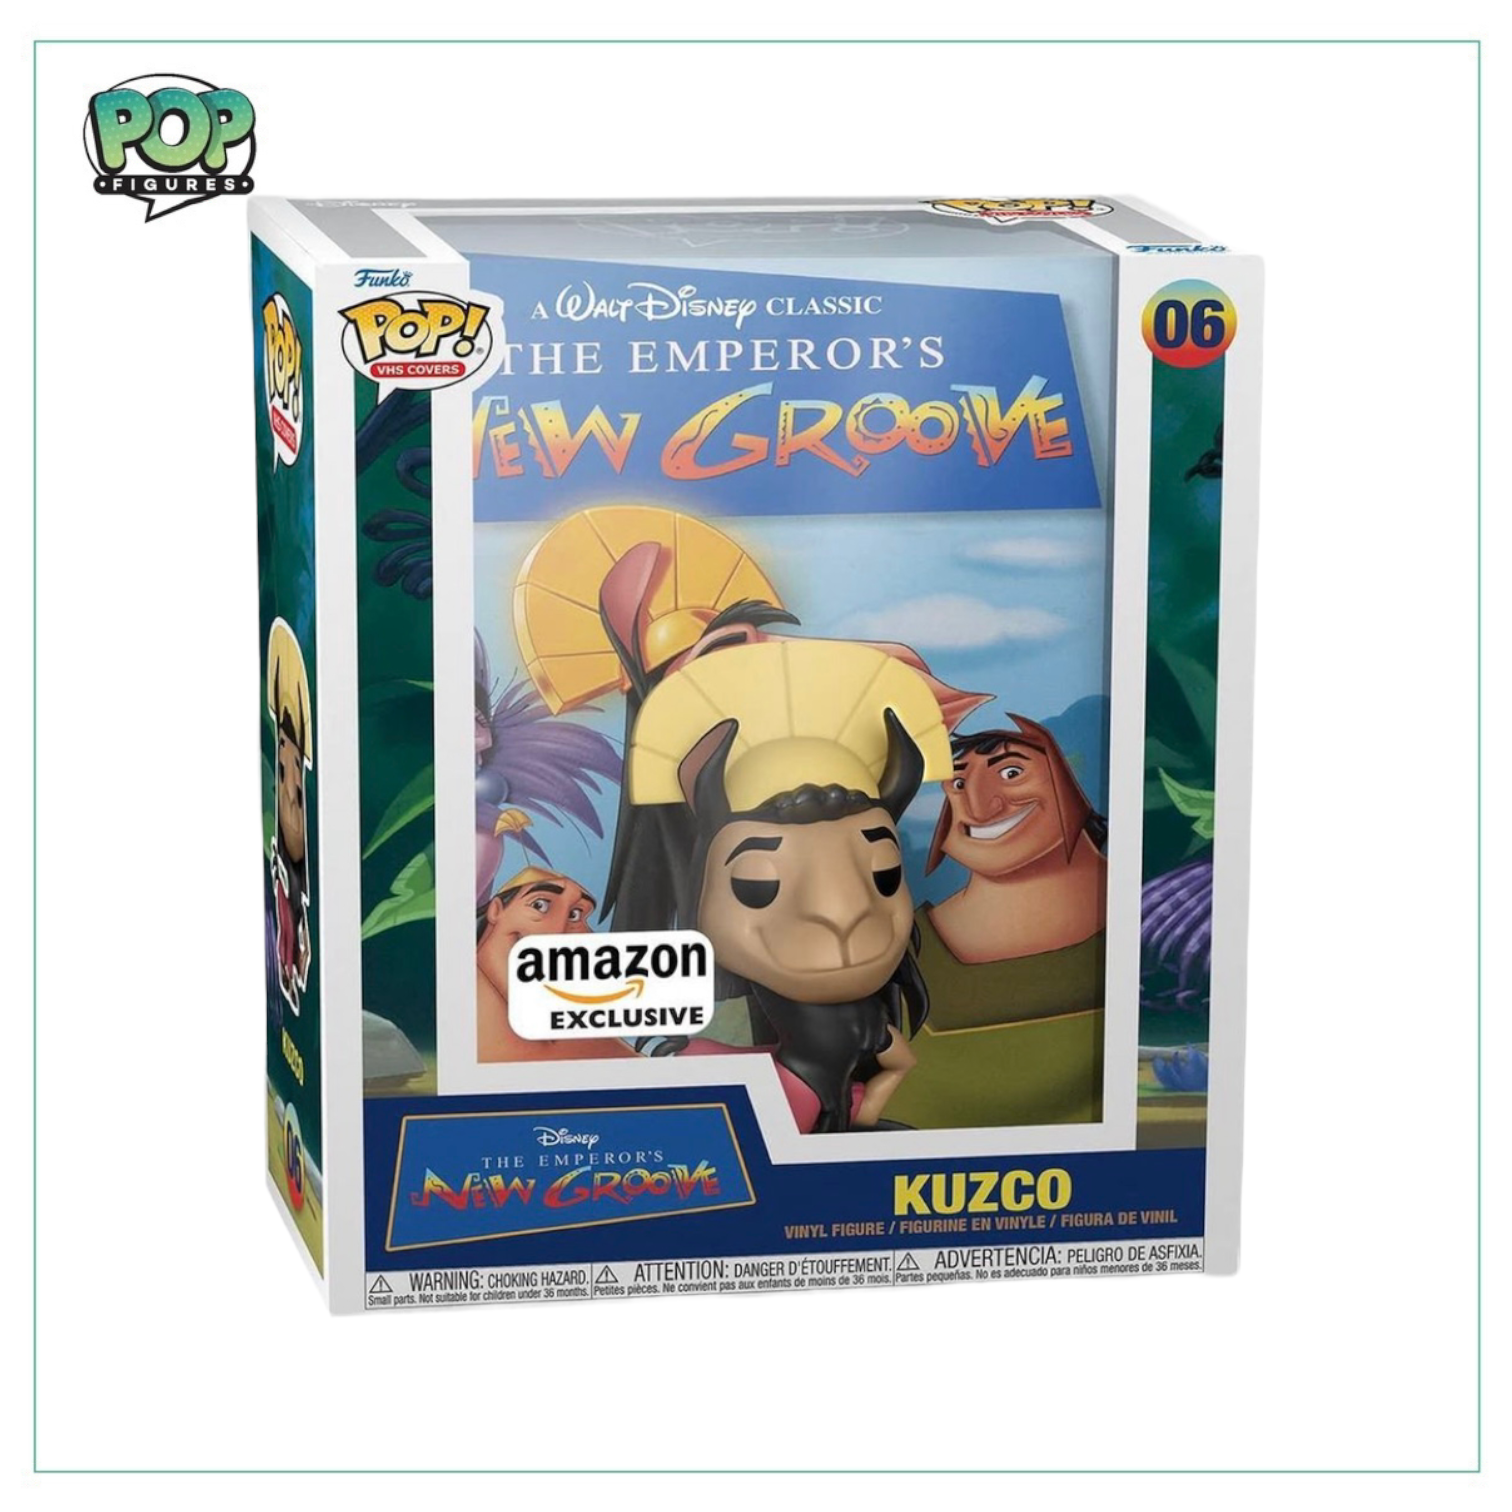 Kuzco #06 Funko Pop! VHS Cover The Emperor’s New Groove - Amazon Exclusive